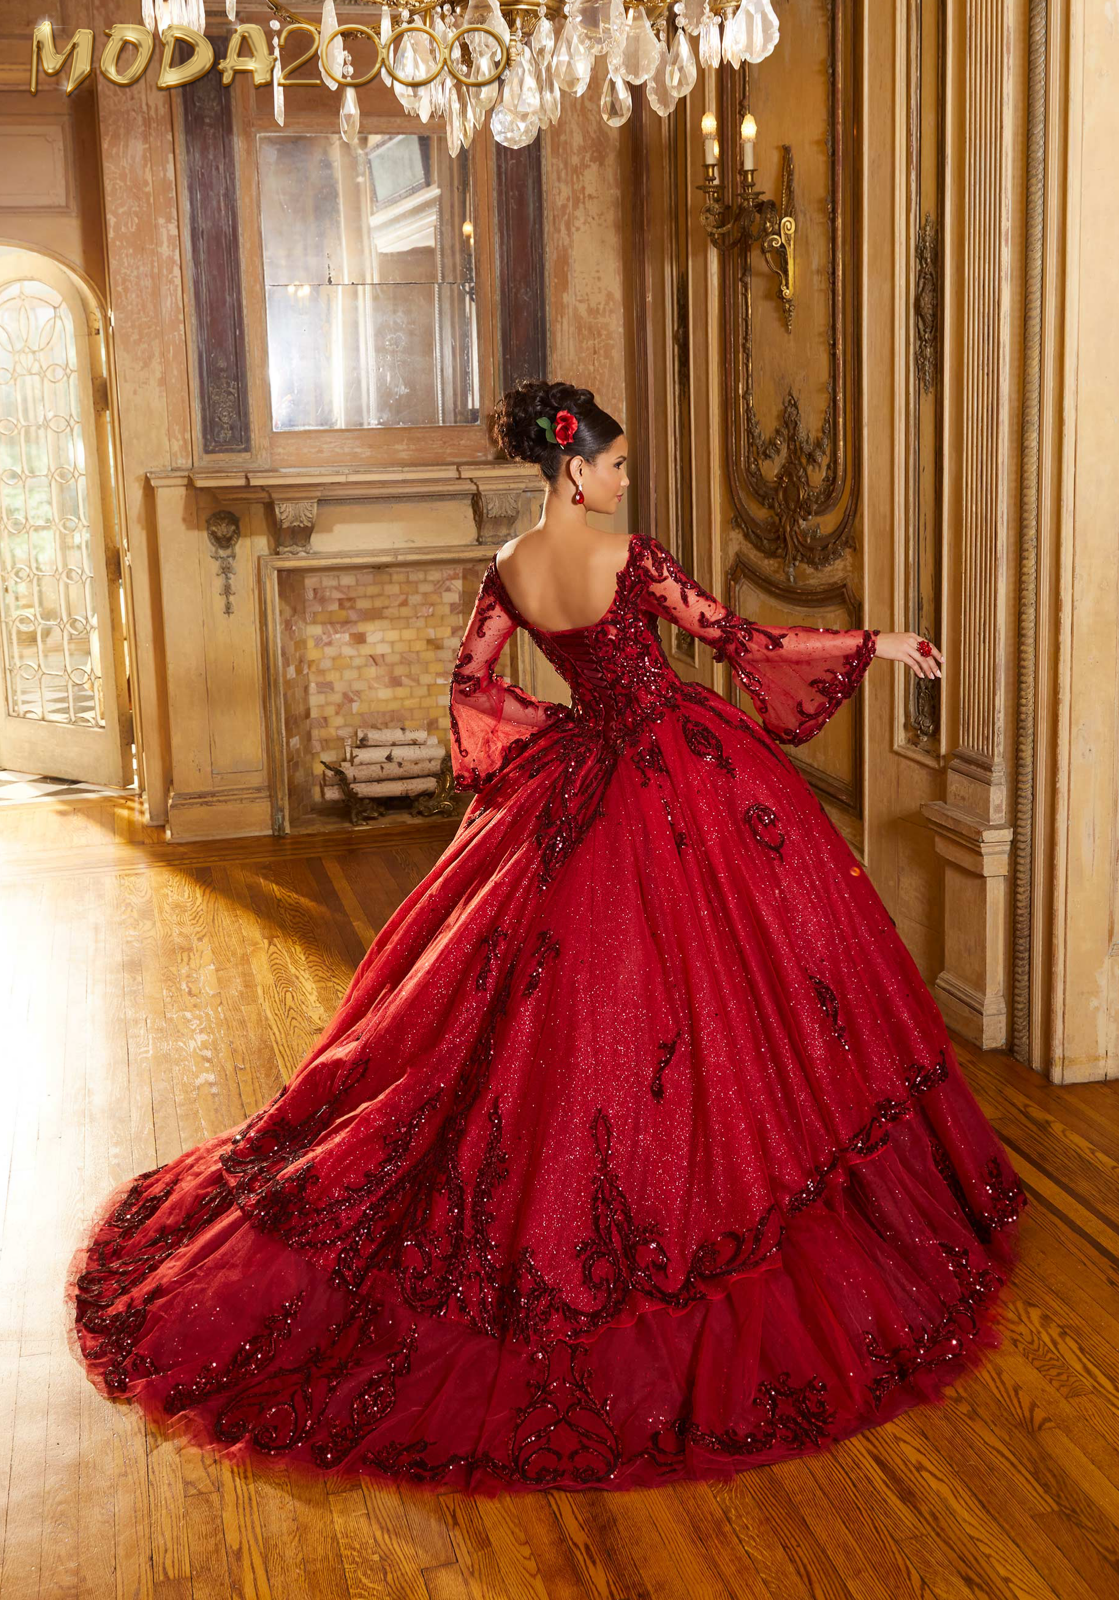 burgundy quince dress